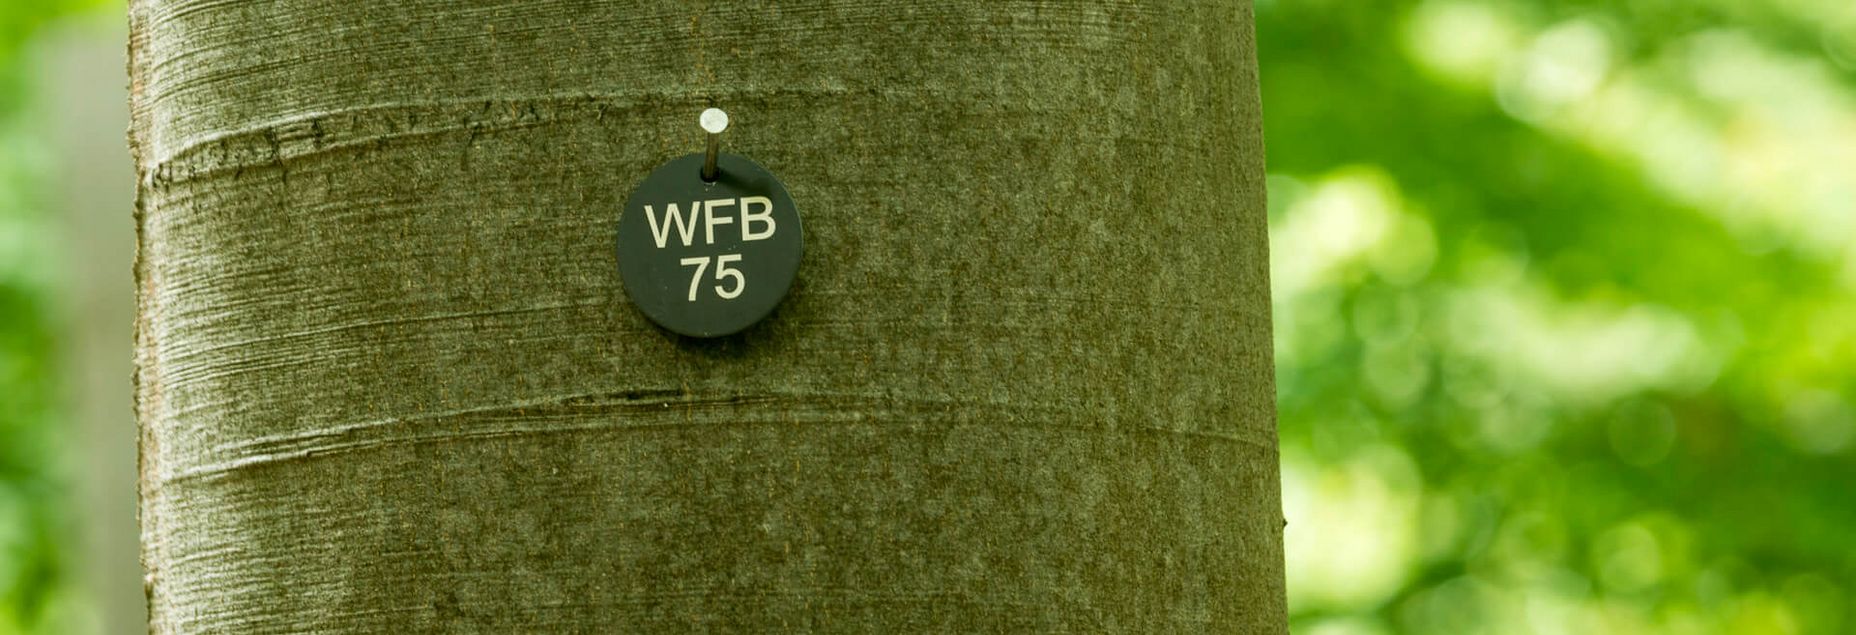 FriedWald-Onlineshop WFB 75